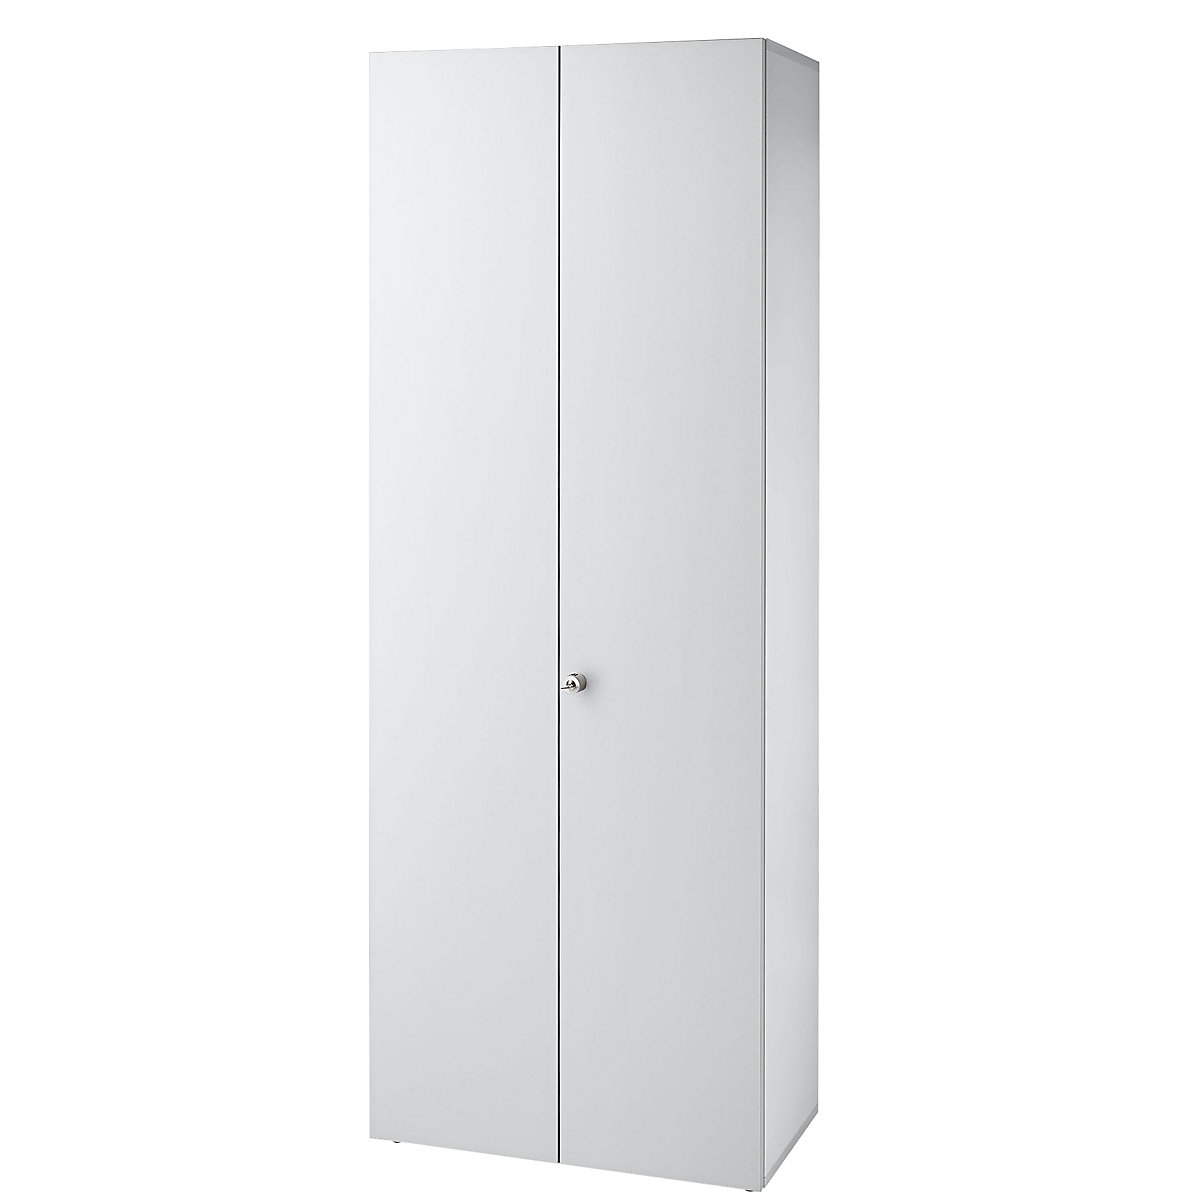 Filing cupboard ANNY – eurokraft pro, hinged doors, 5 shelves, light grey / light grey-10